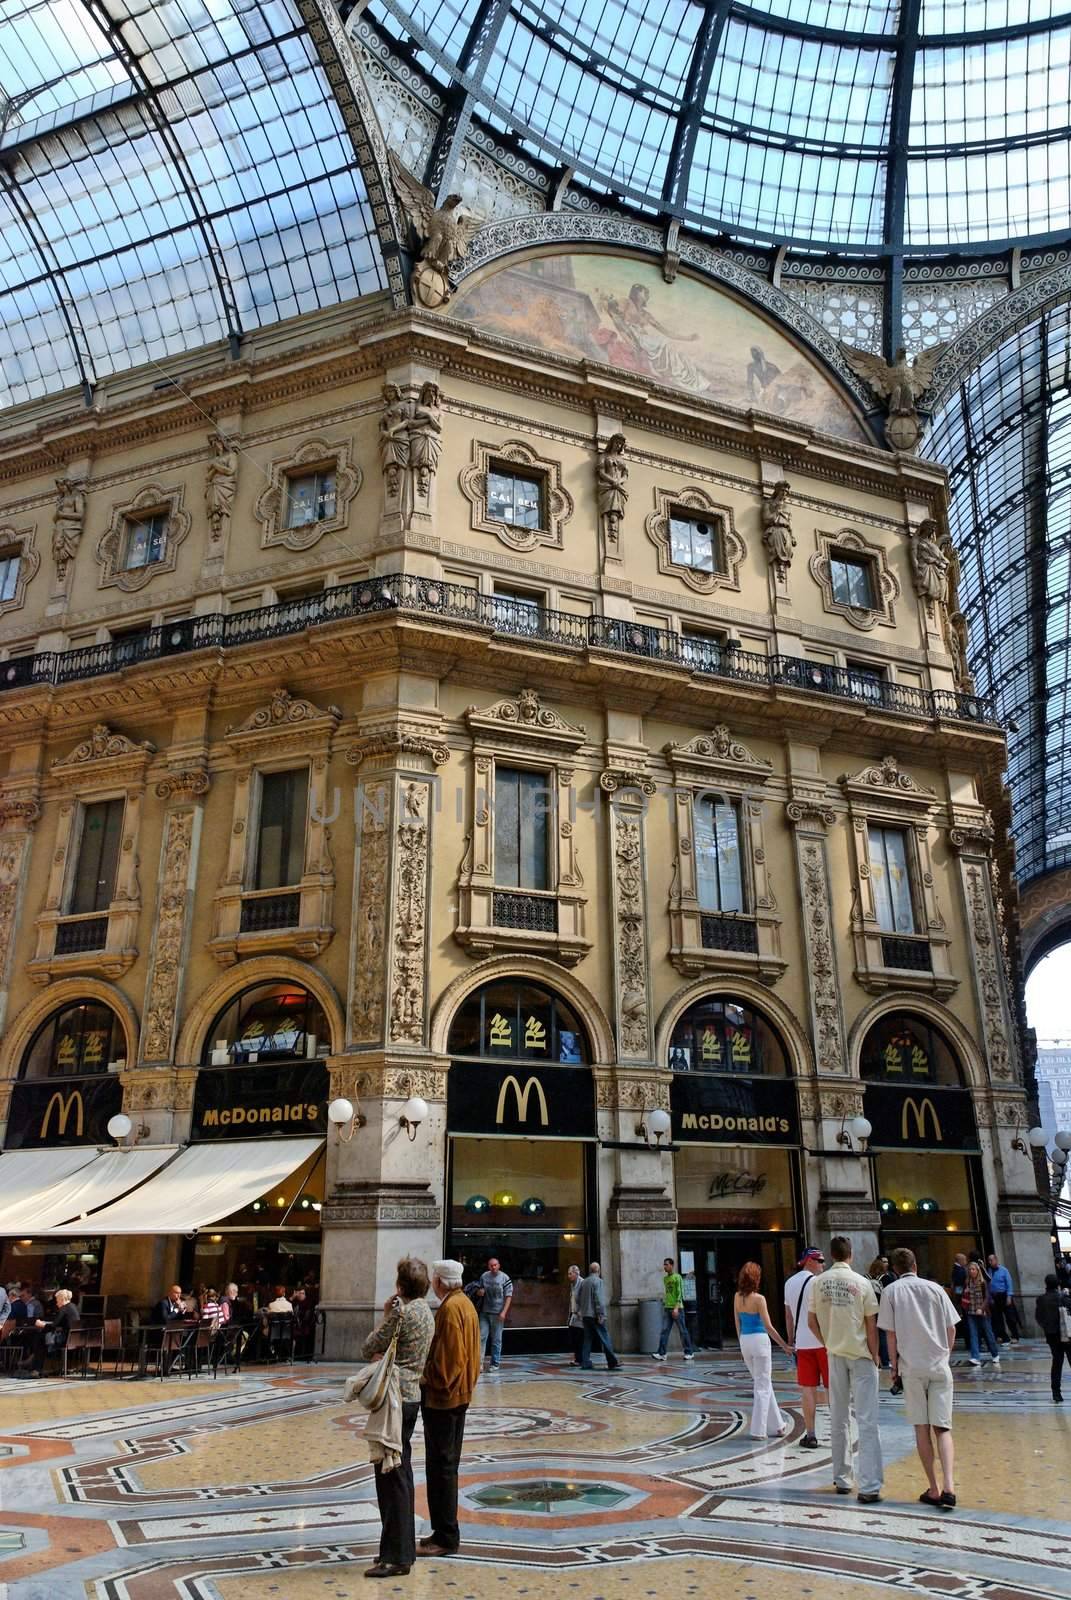 McDonald inside Galleria Vittorio Emanuele - Milan Italy by Laborer